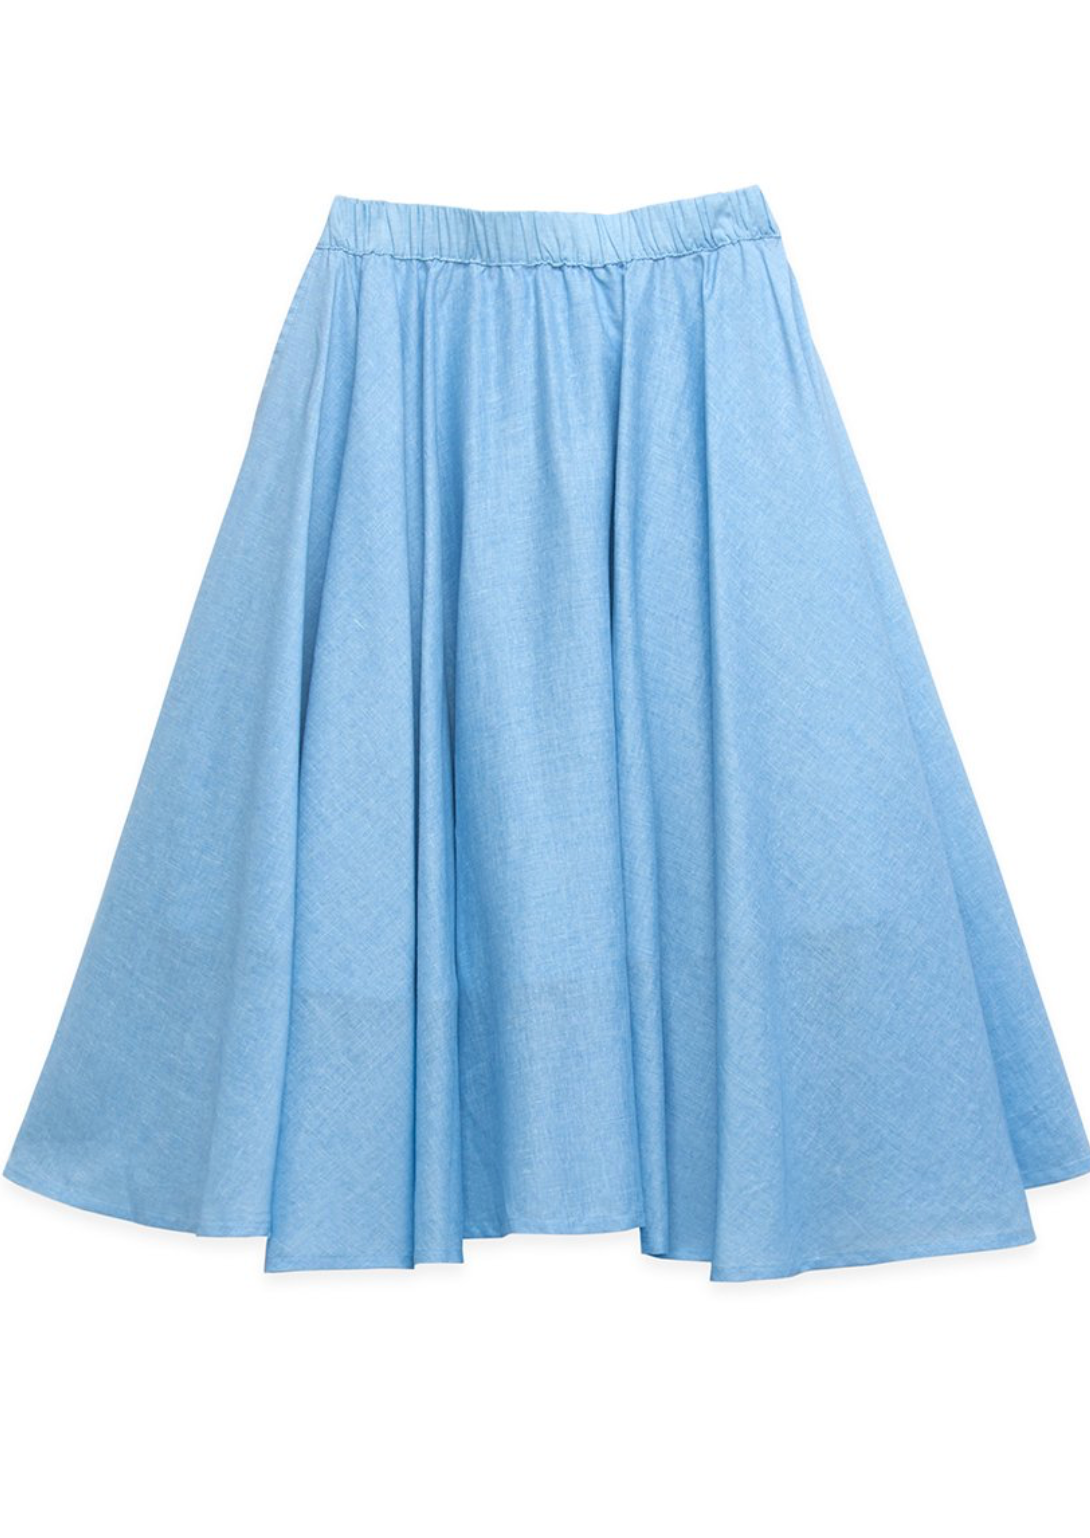 Jamaica Blue Skirt